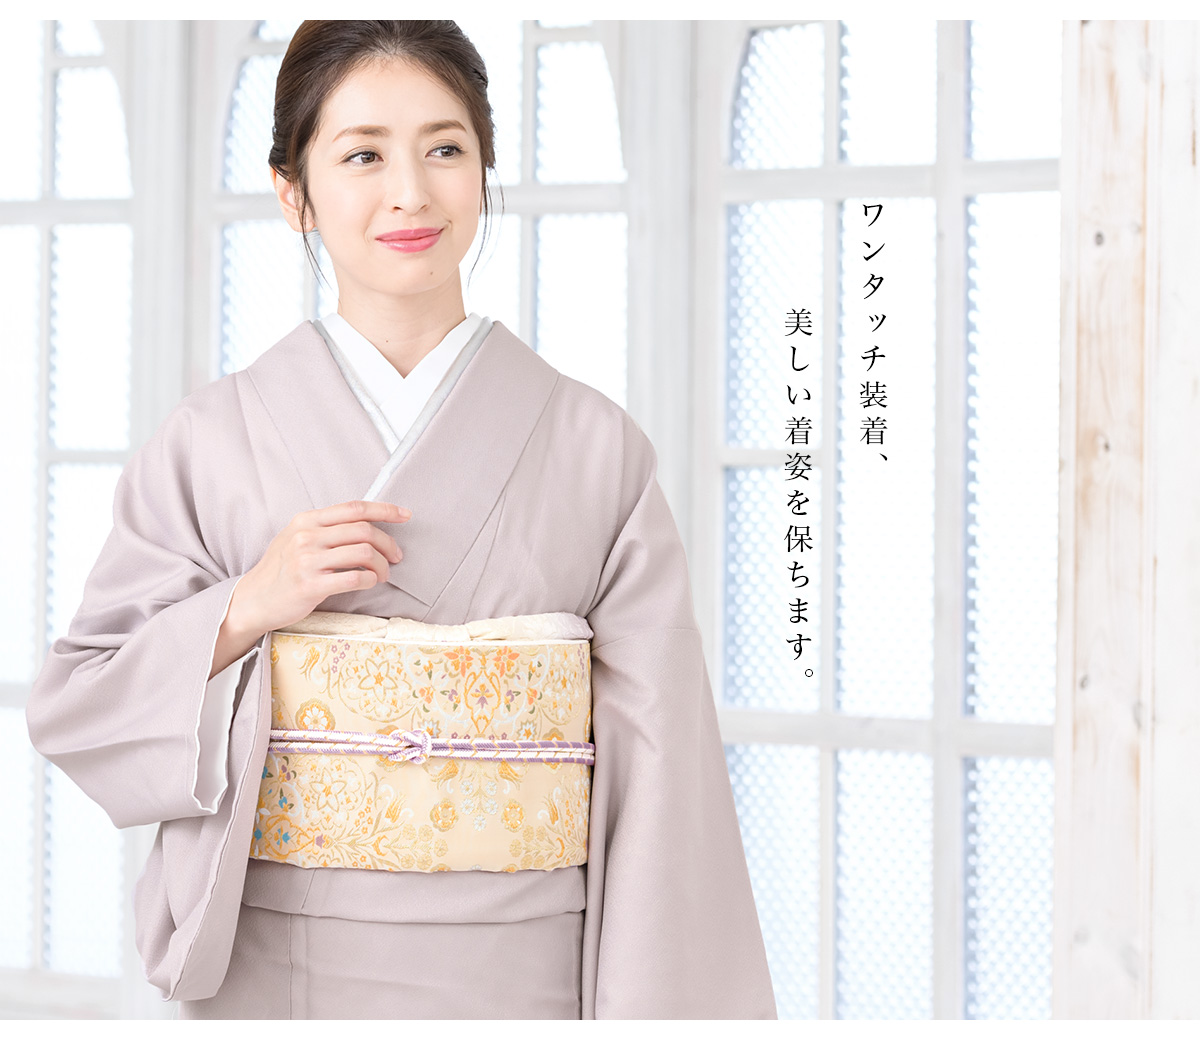  date tighten Magic belt mesh kimono dressing accessories through year woman lady's long kimono-like garment yukata white ... mail service 